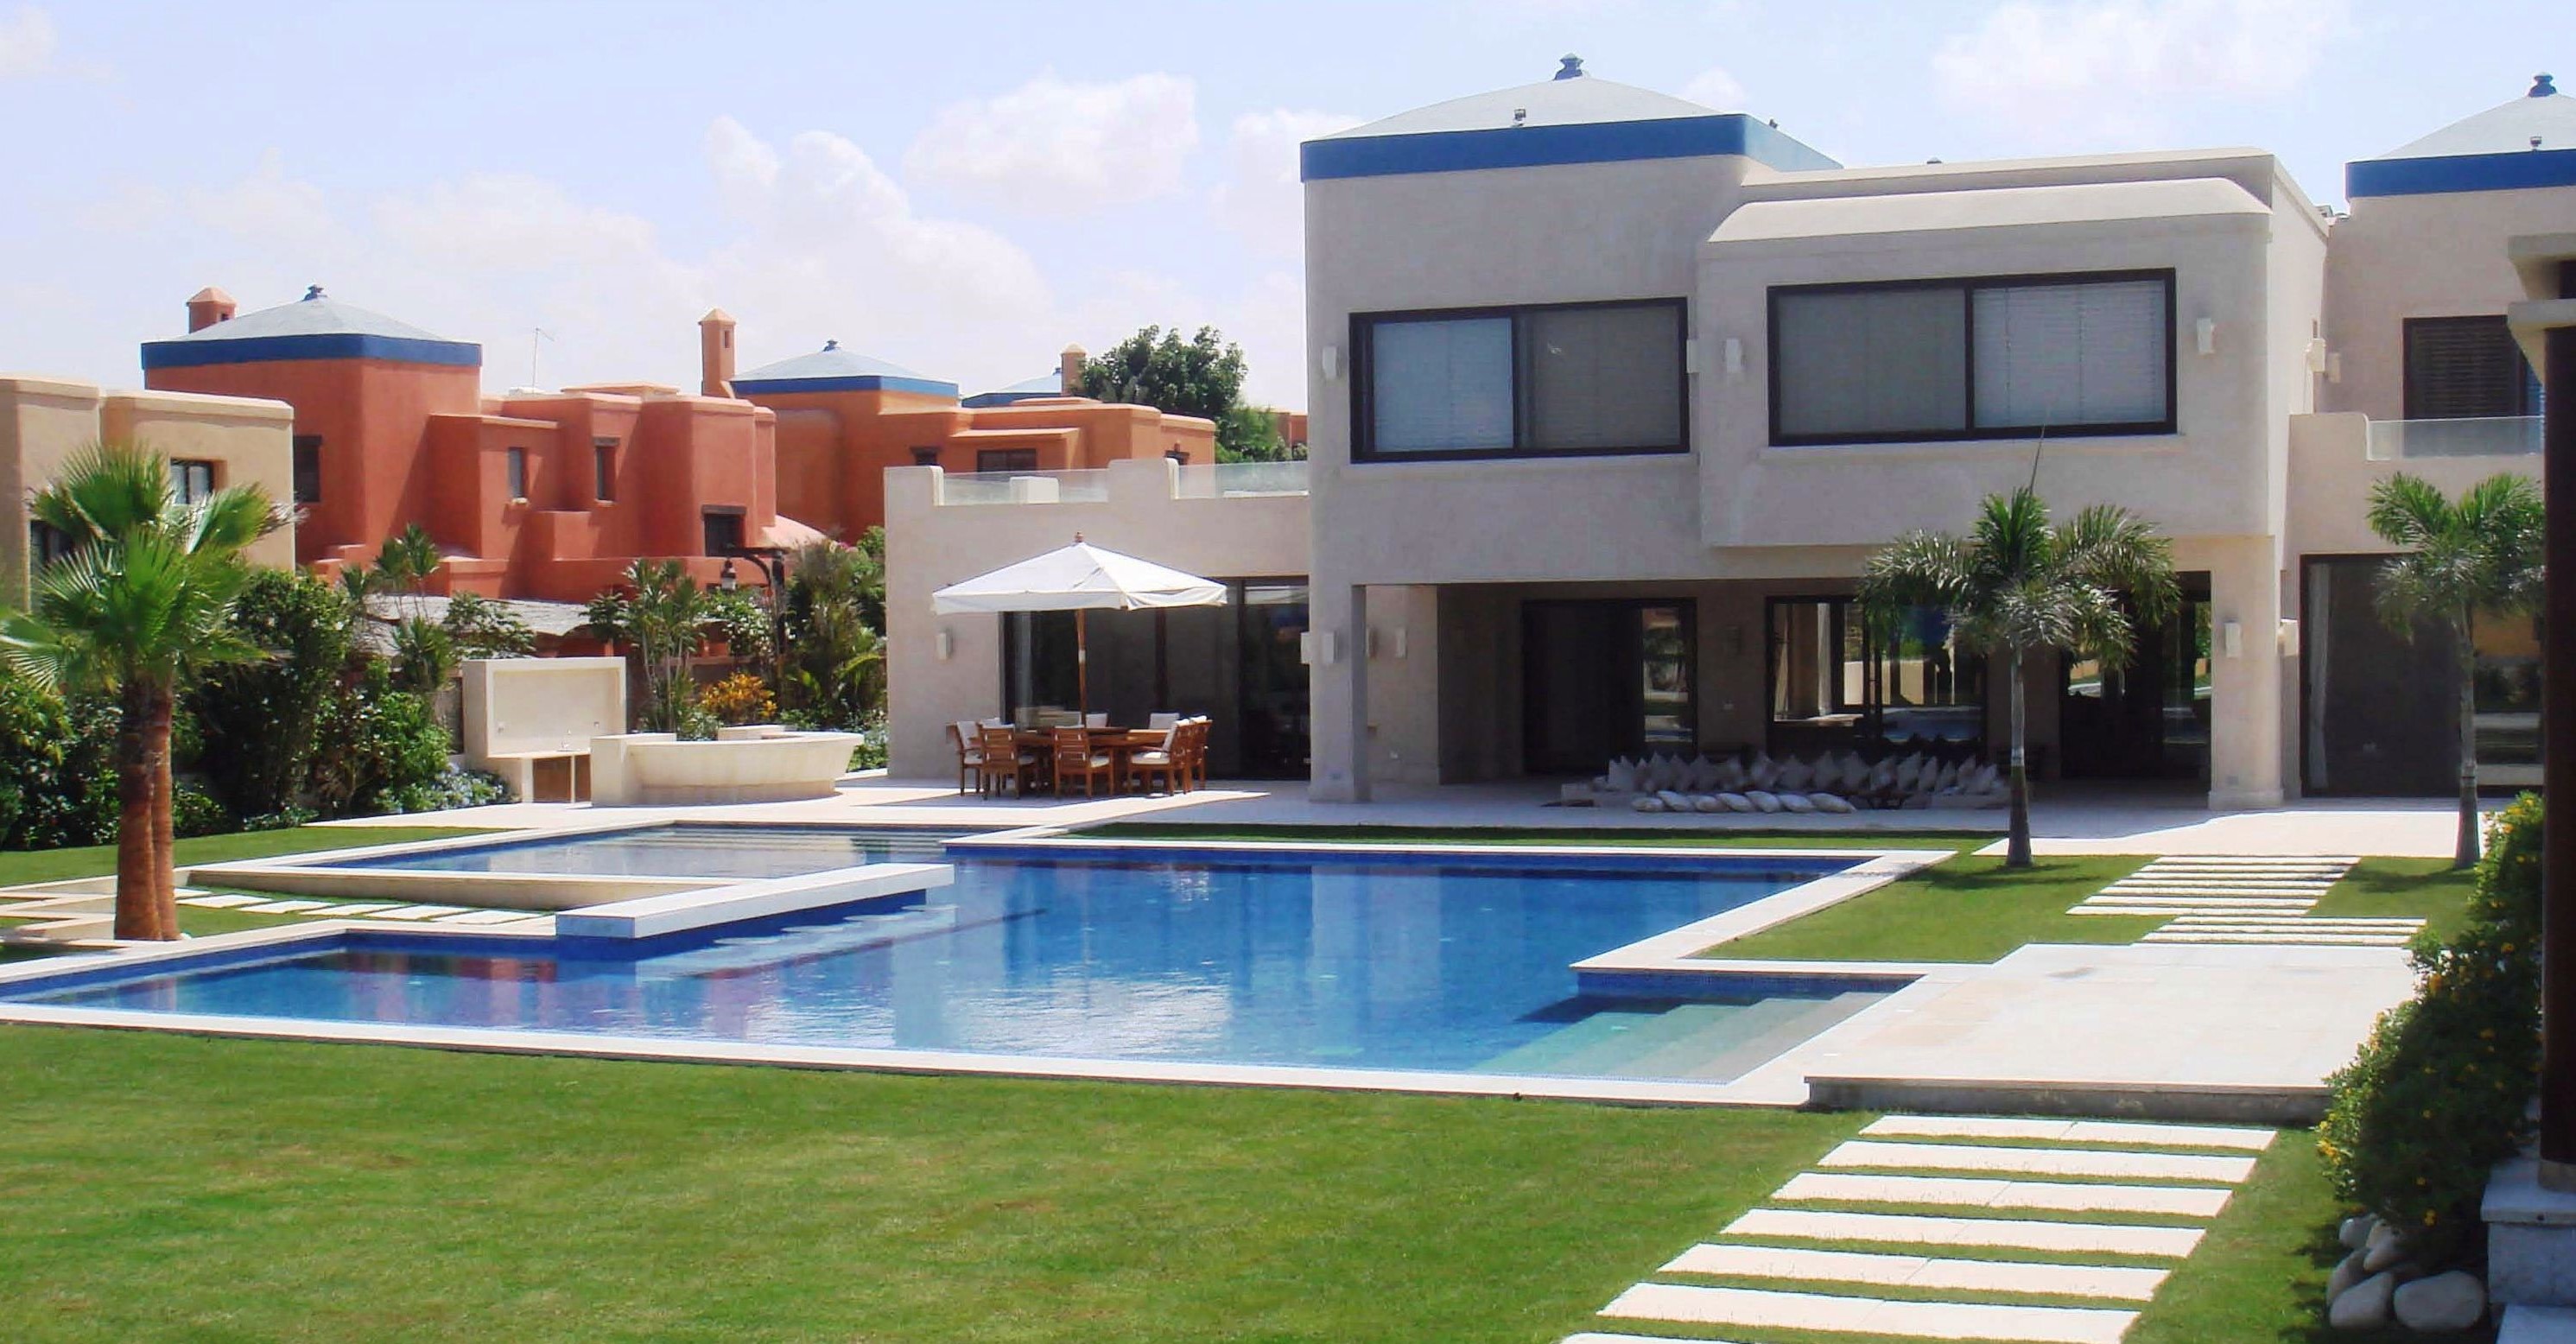 adobe style villa